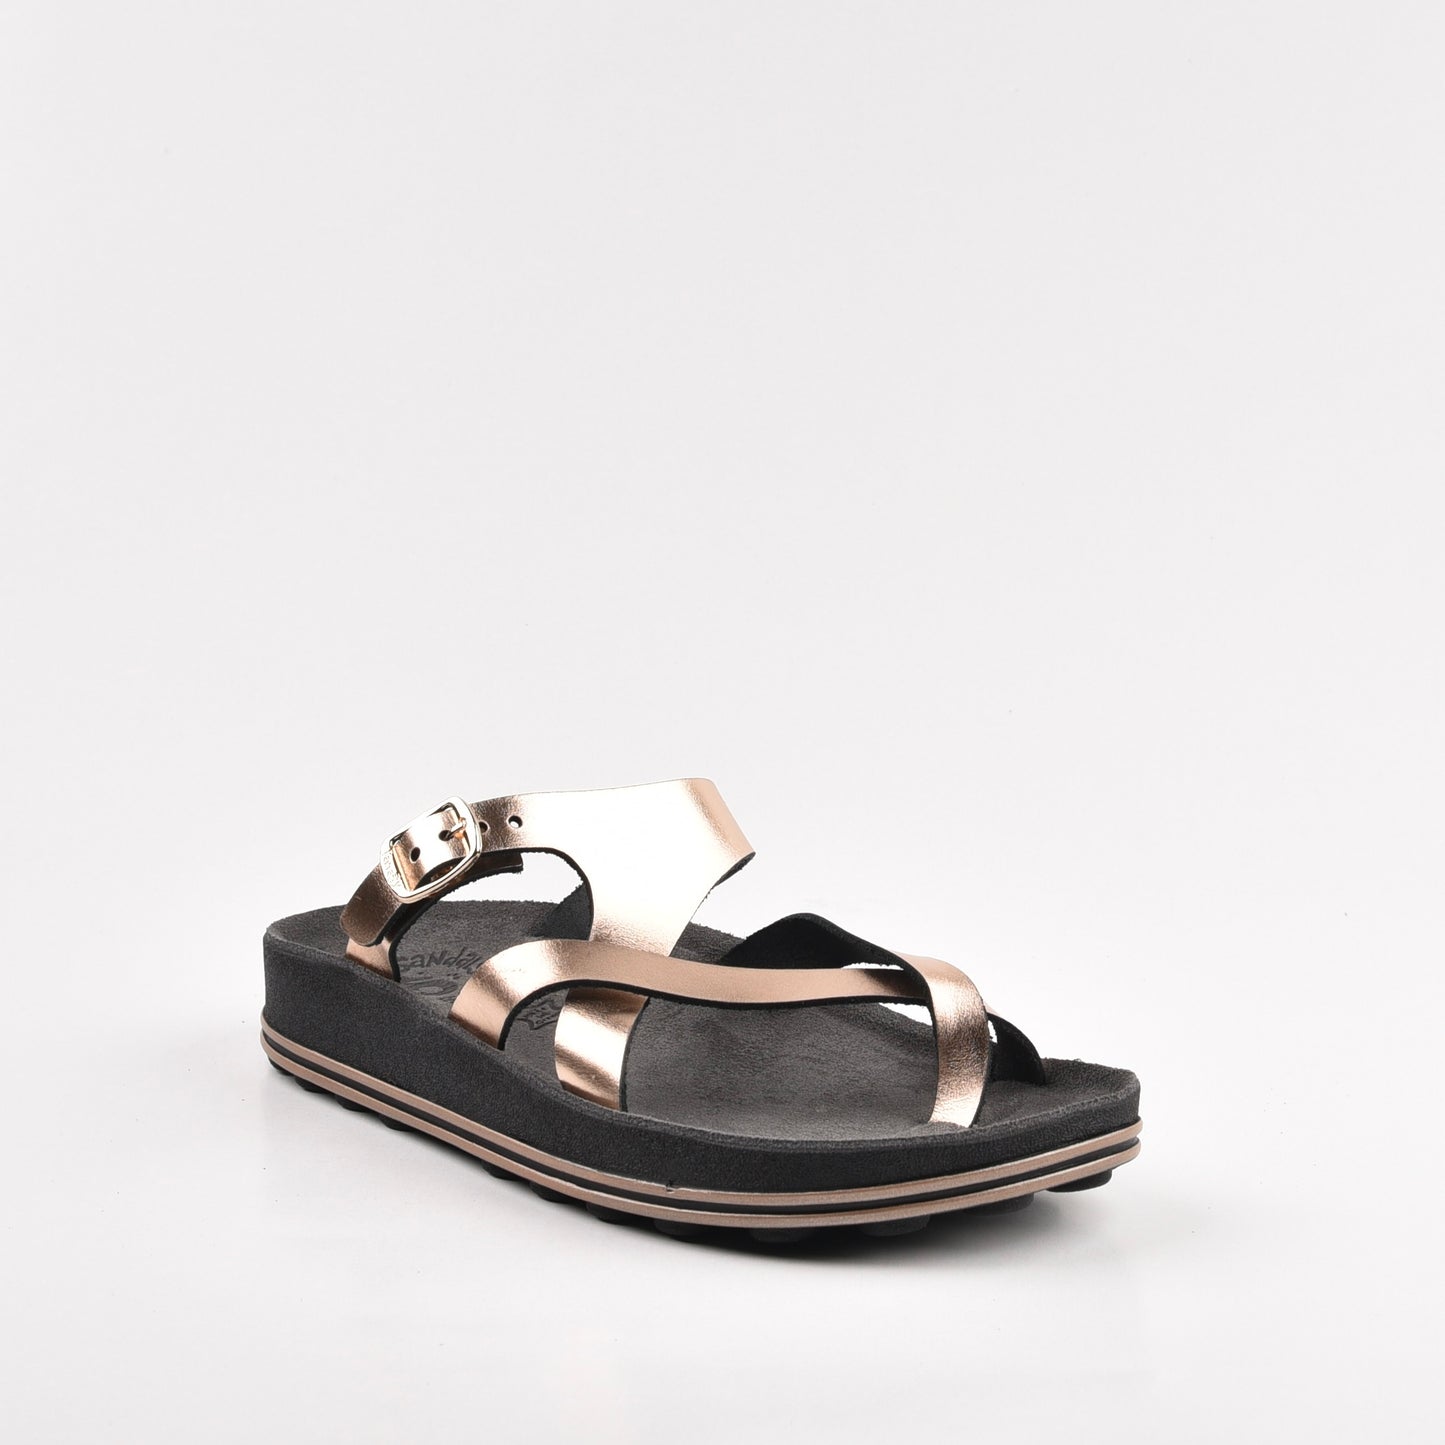 Fantasy sandals 100% Genuine Leather Greek Slipper for Women in gold